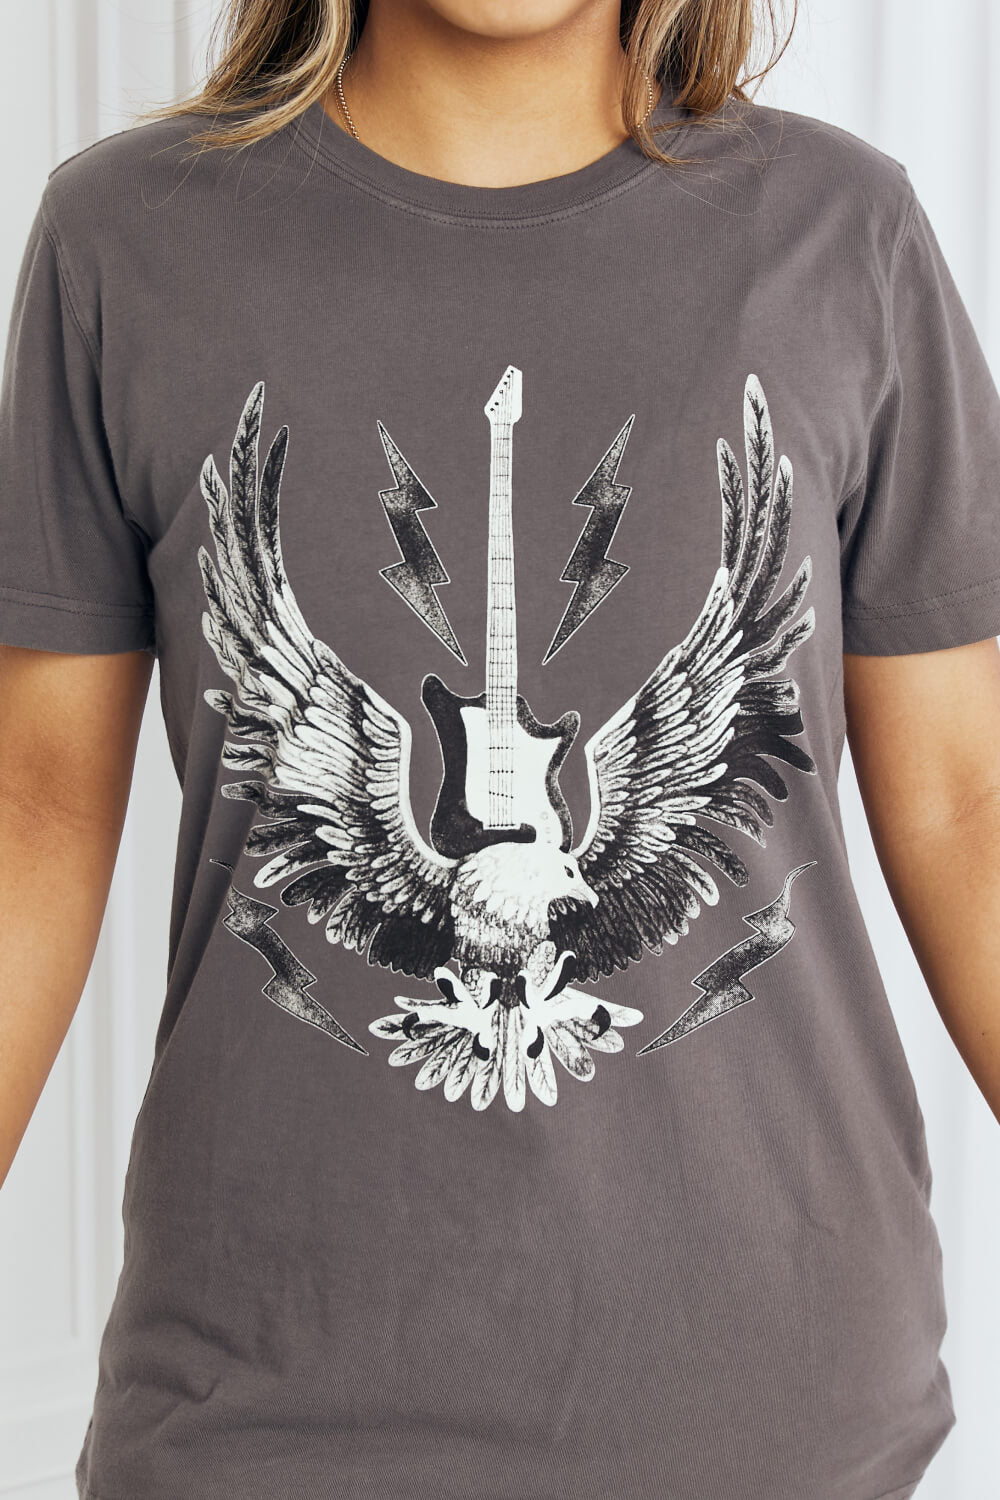 mineB Full Size Eagle Graphic Tee Shirt | Tees - CHANELIA